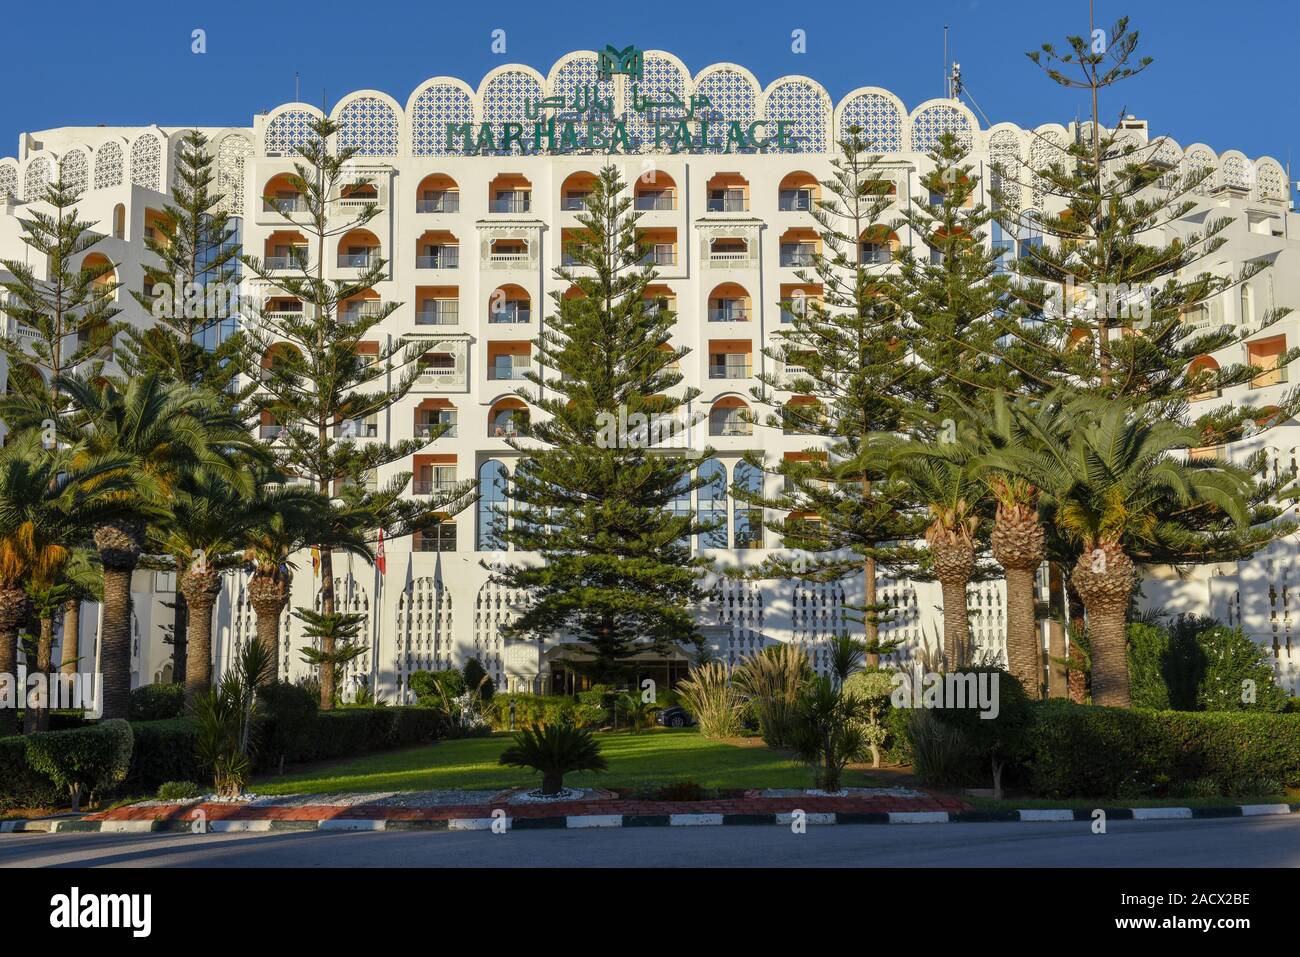 El Kantaoui, Tunisia - 7 November 2019: Marhaba Palace hotel at El Kantaoui on Tunisia Stock Photo